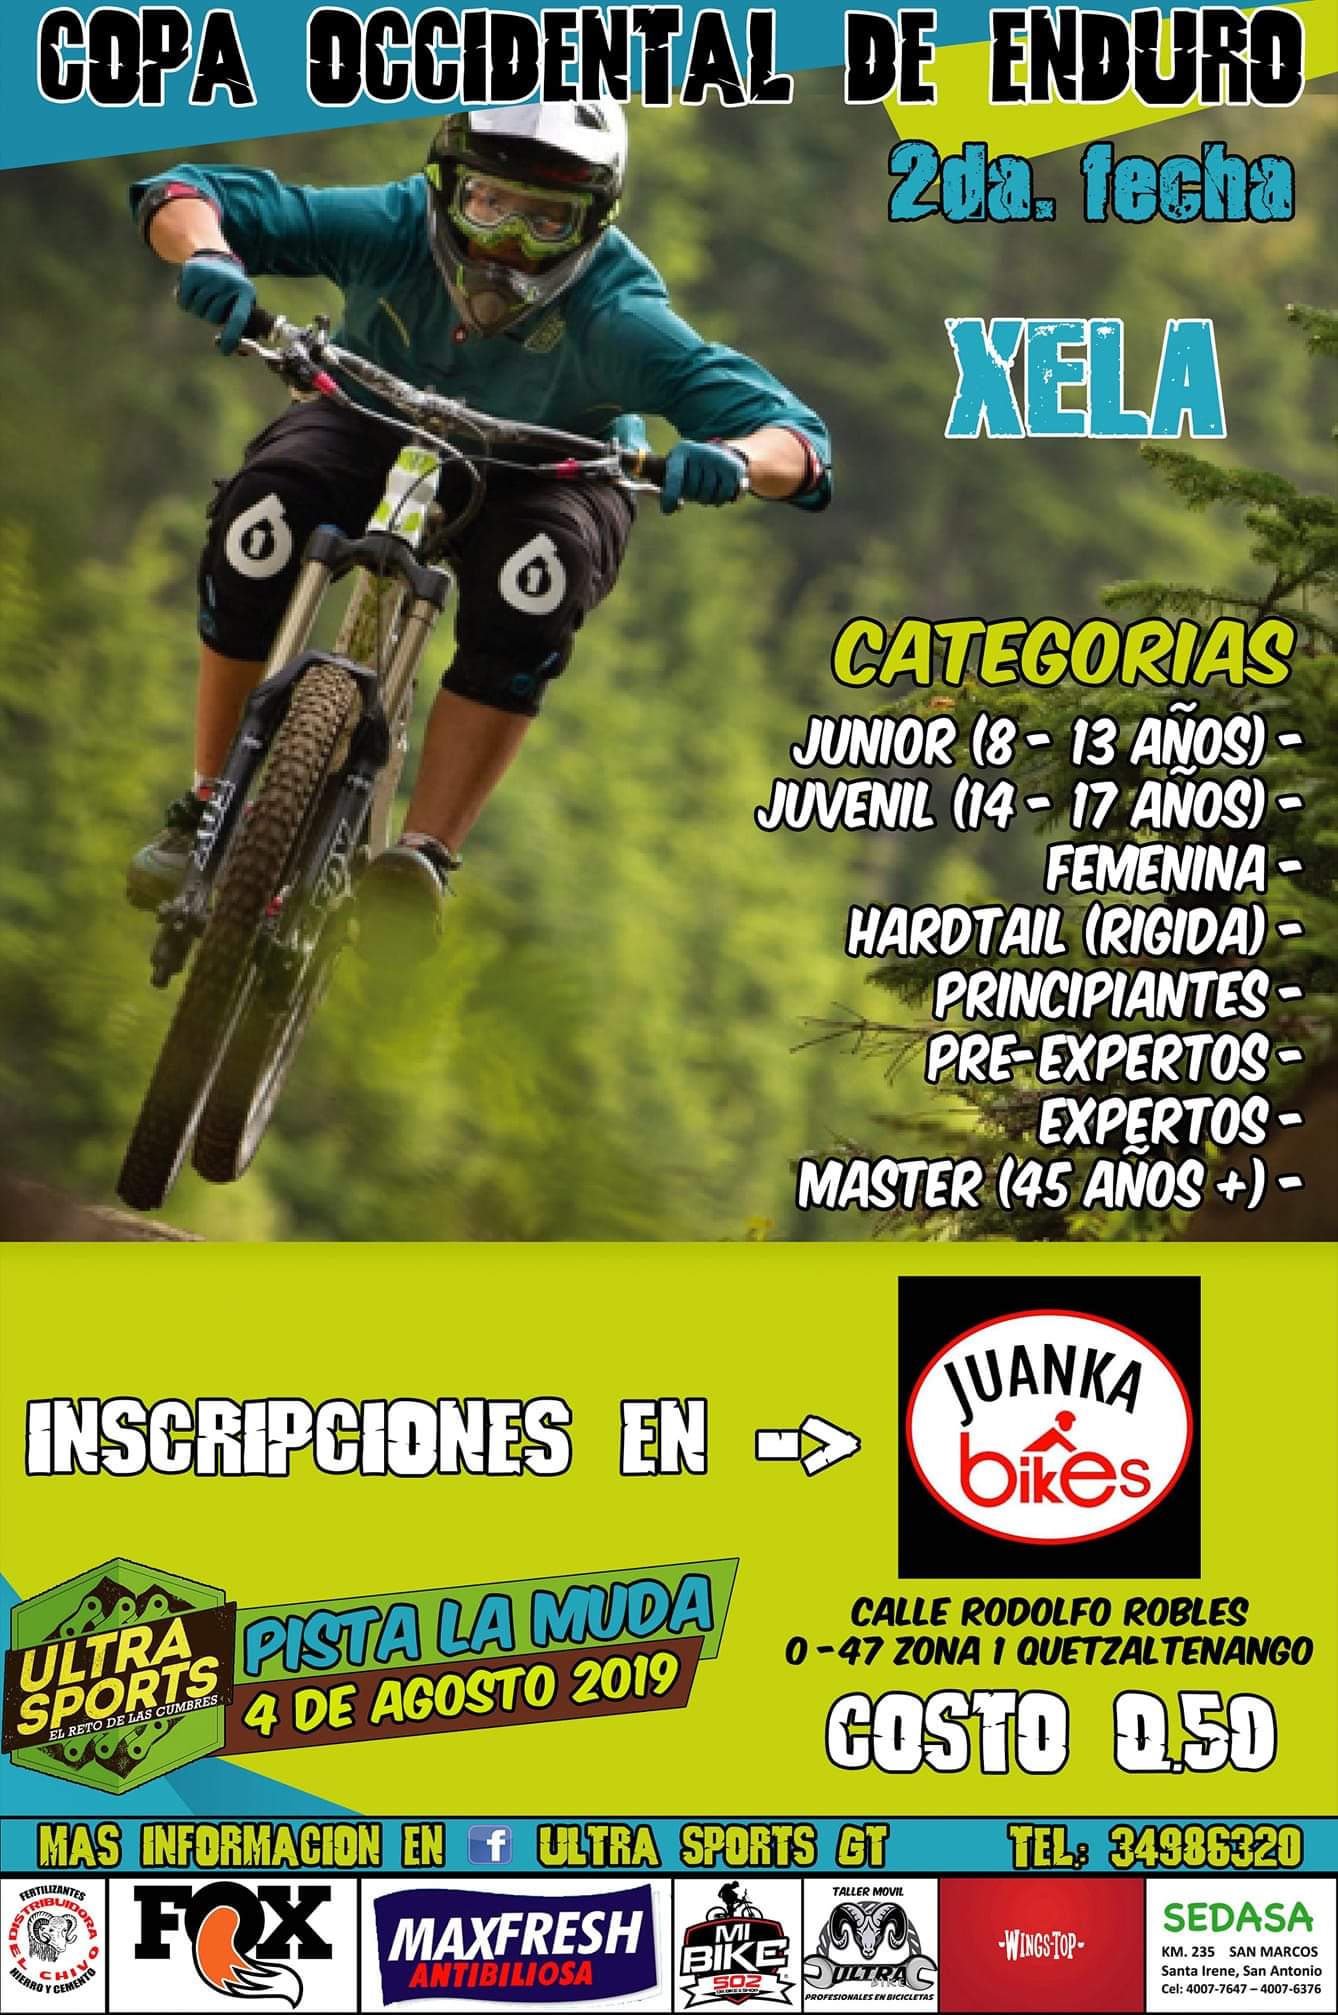 2nd Edition Copa Oriente Enduro - Xela